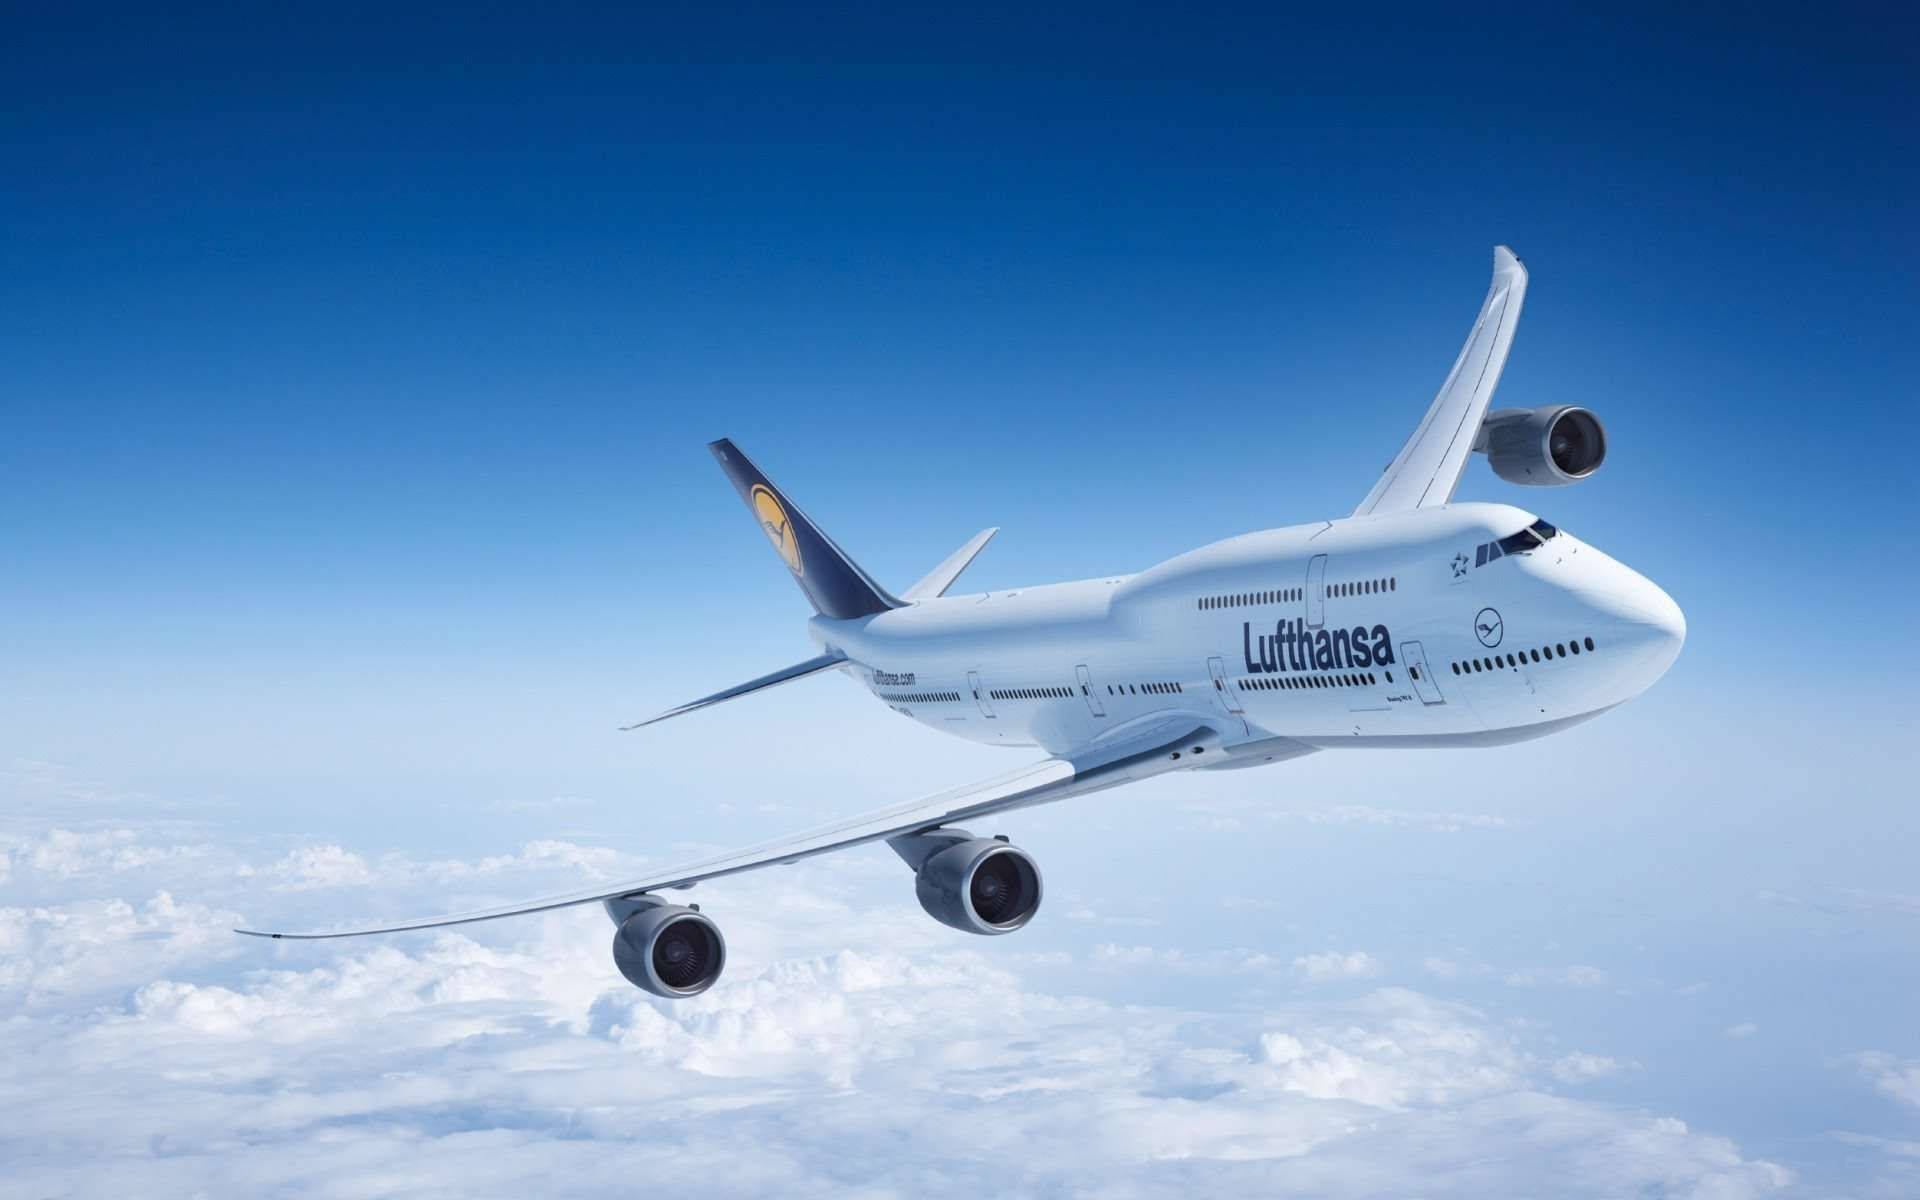 Deutsche Lufthansa Airplane On A Sea Of Clouds Picture